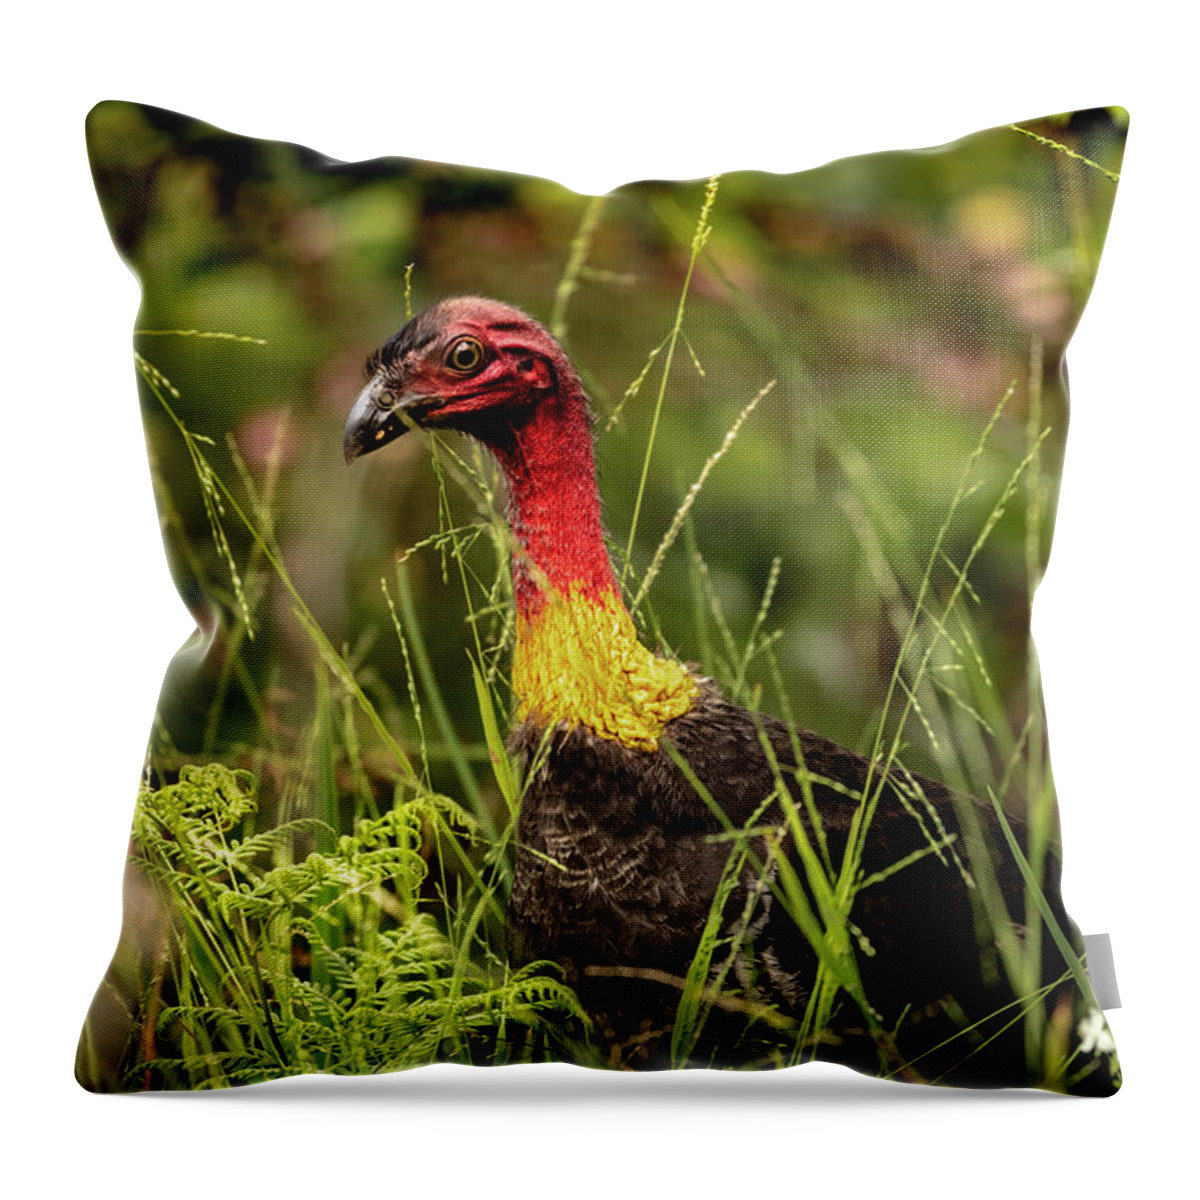 Australia Throw Pillow featuring the photograph Brush Turkey by Chris Cousins